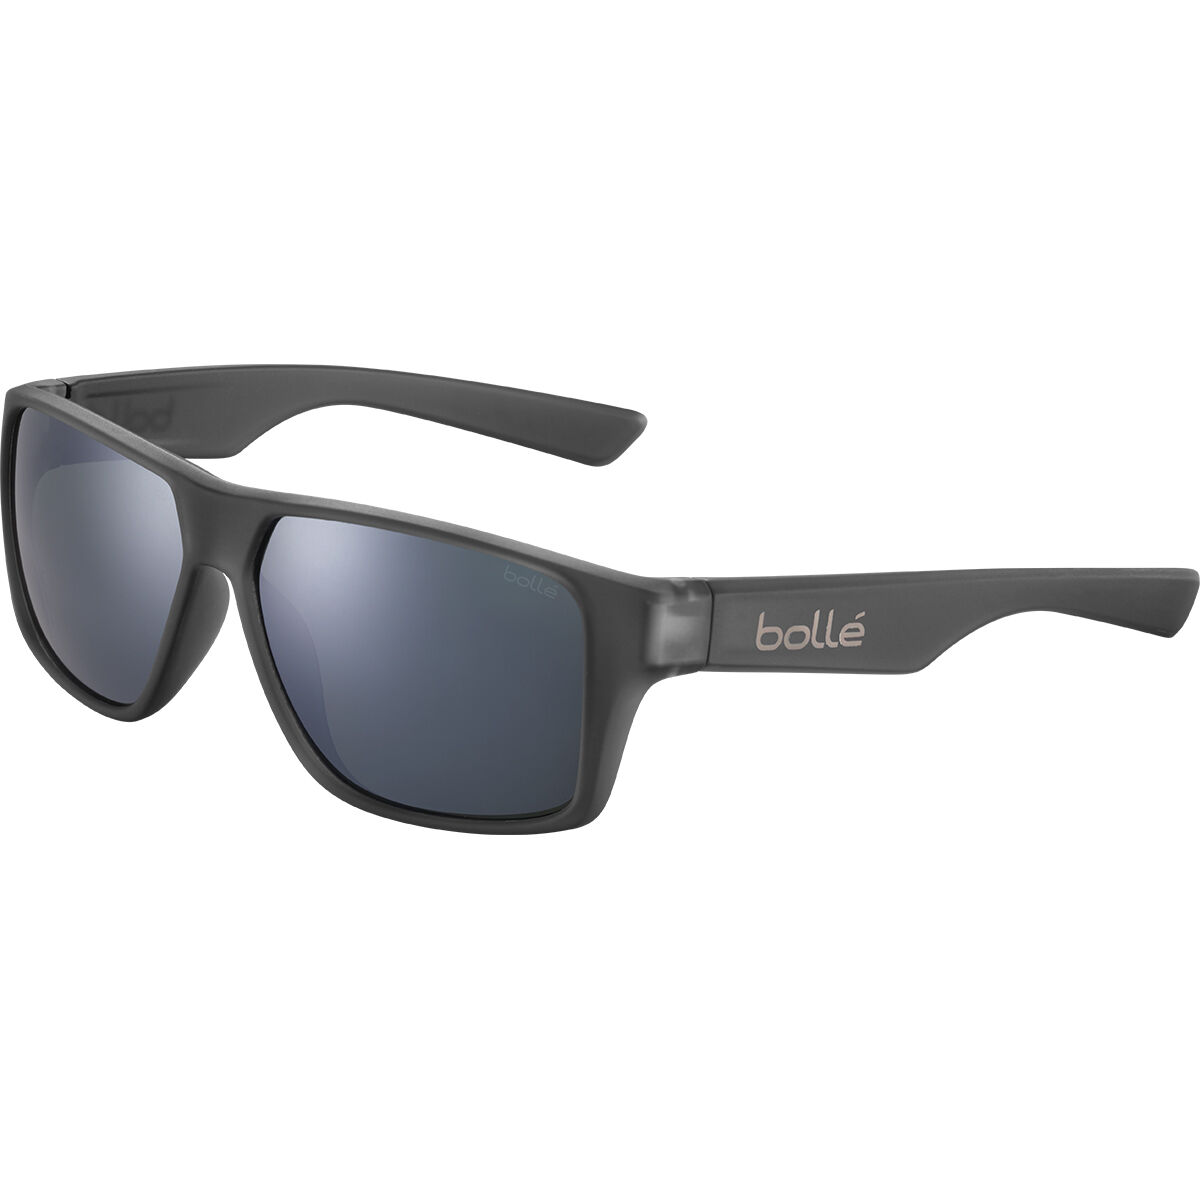 Men's Sunglasses | Bollé